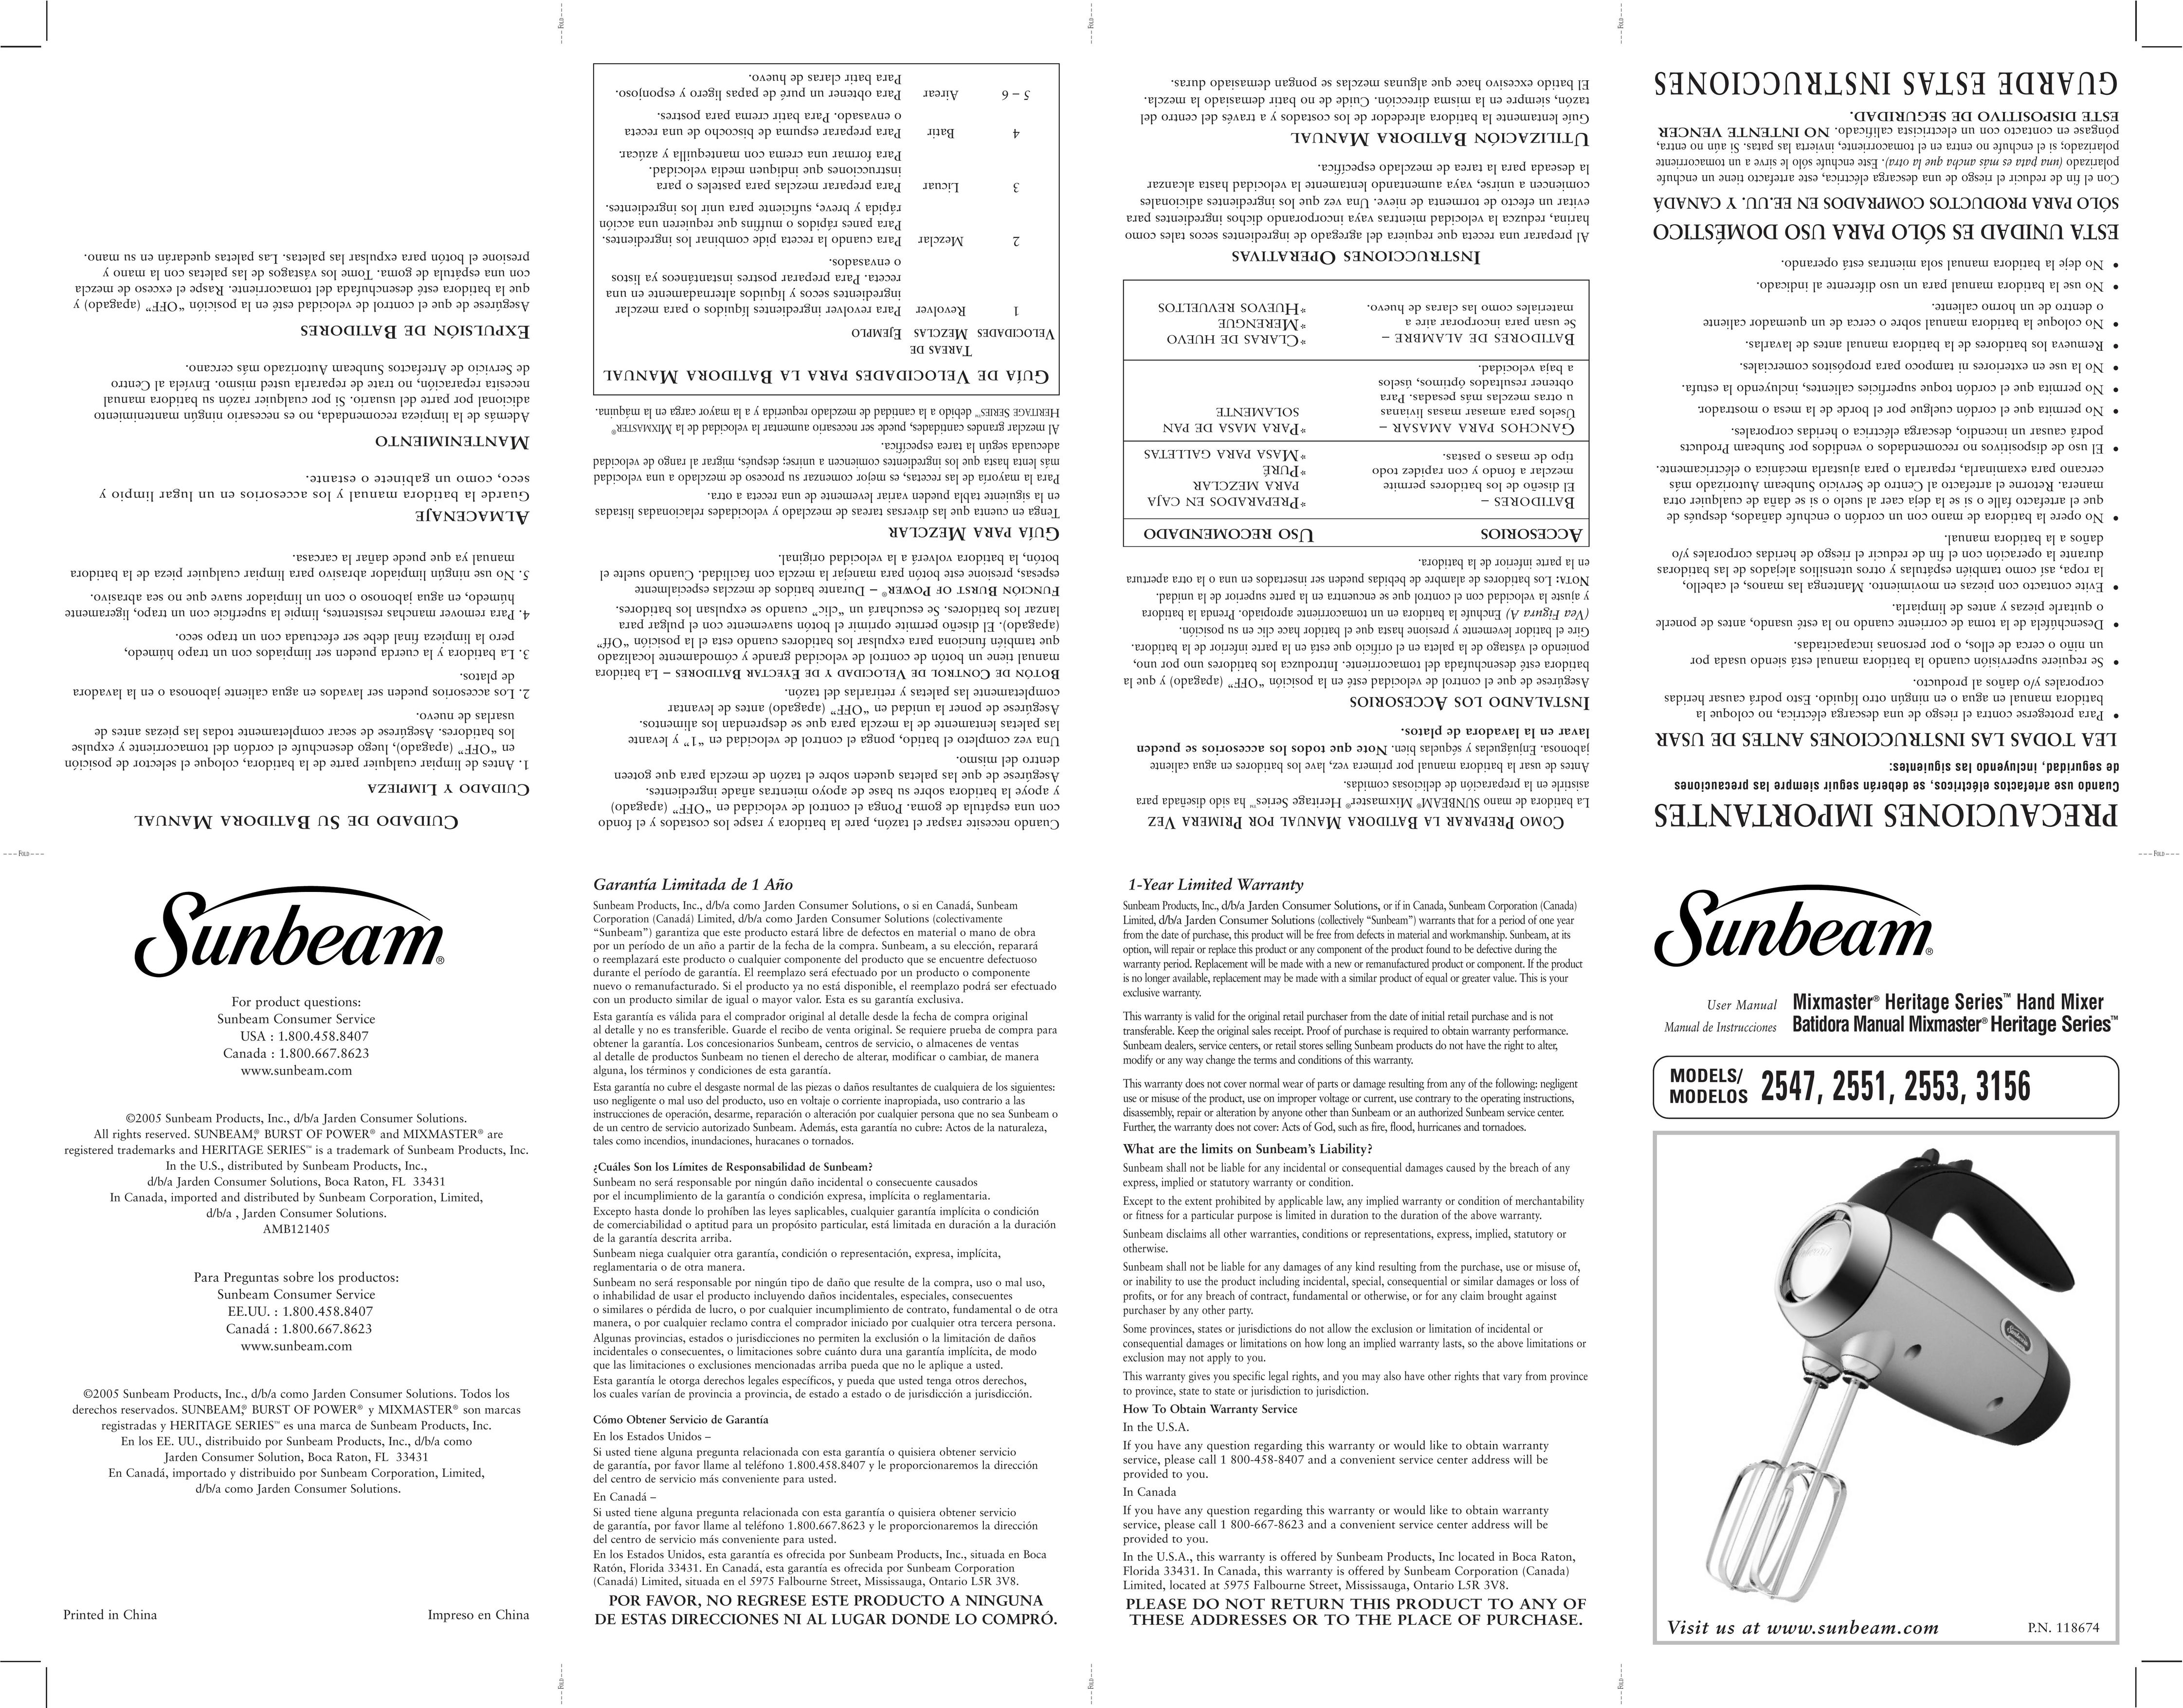 Sunbeam 2547 Mixer User Manual